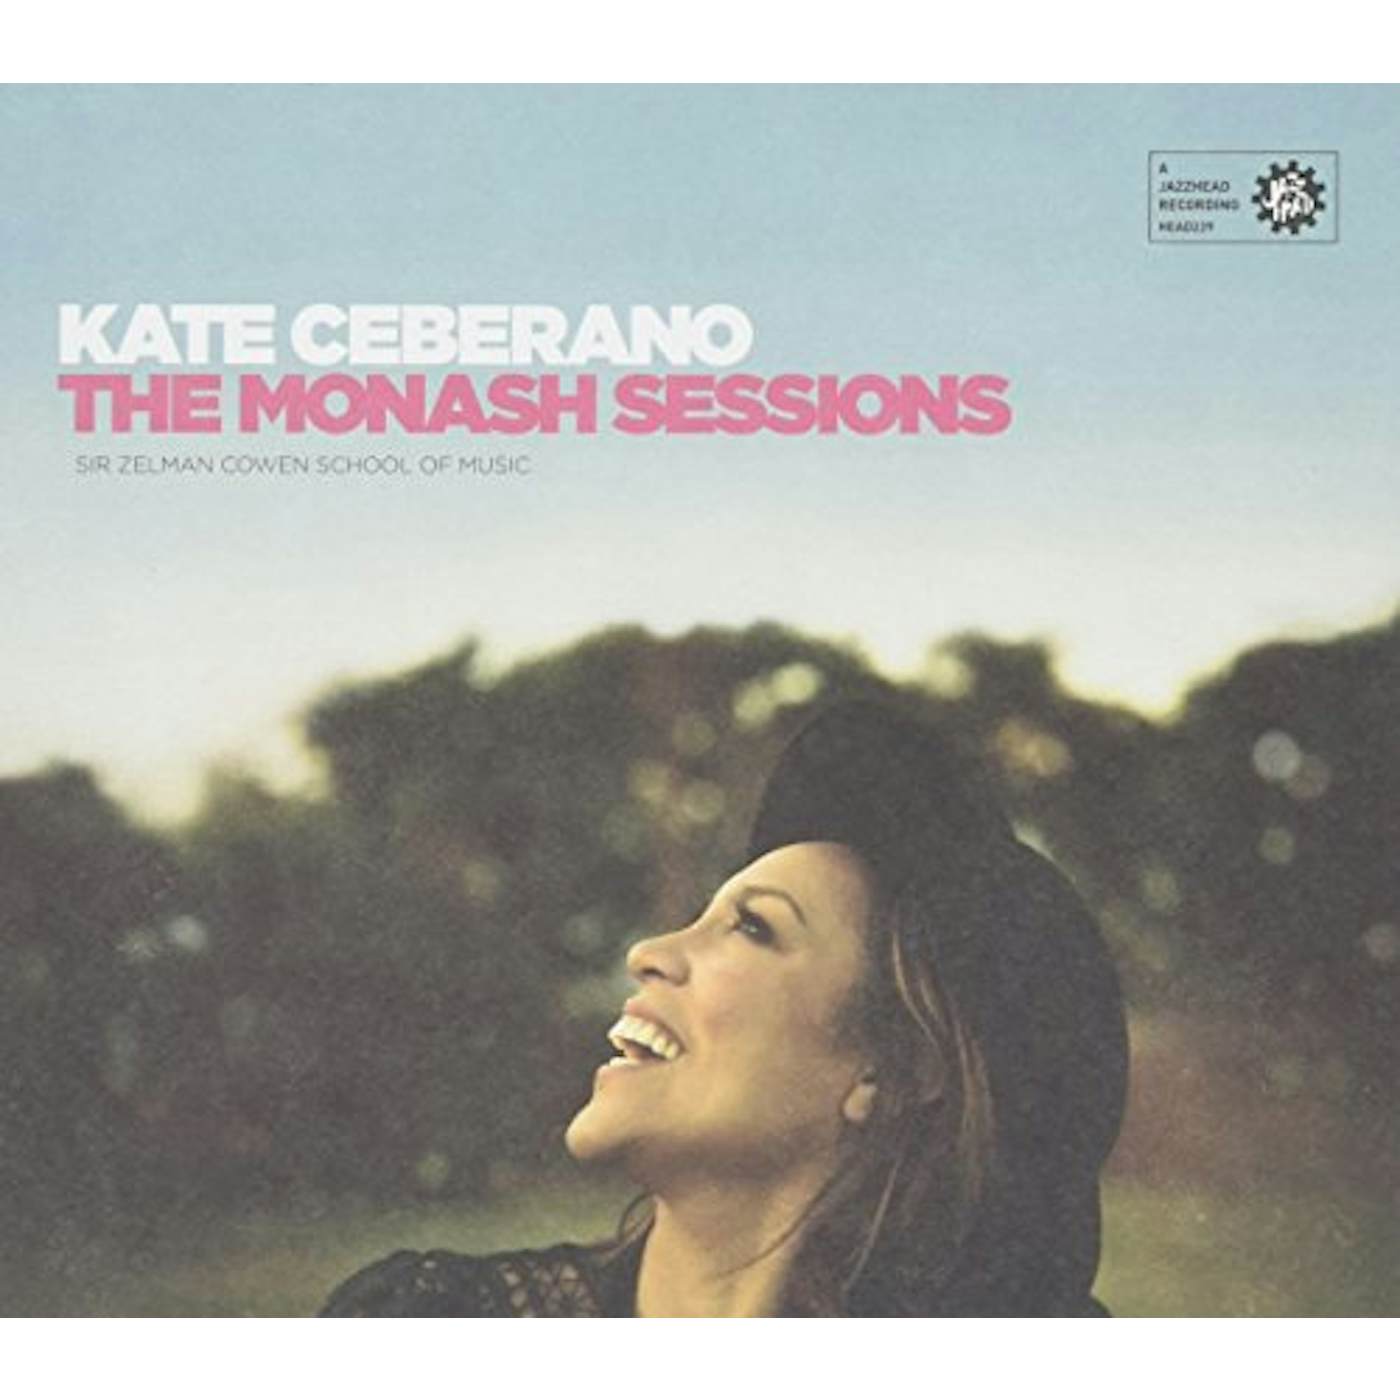 MONASH SESSIONS: KATE CEBERANO CD